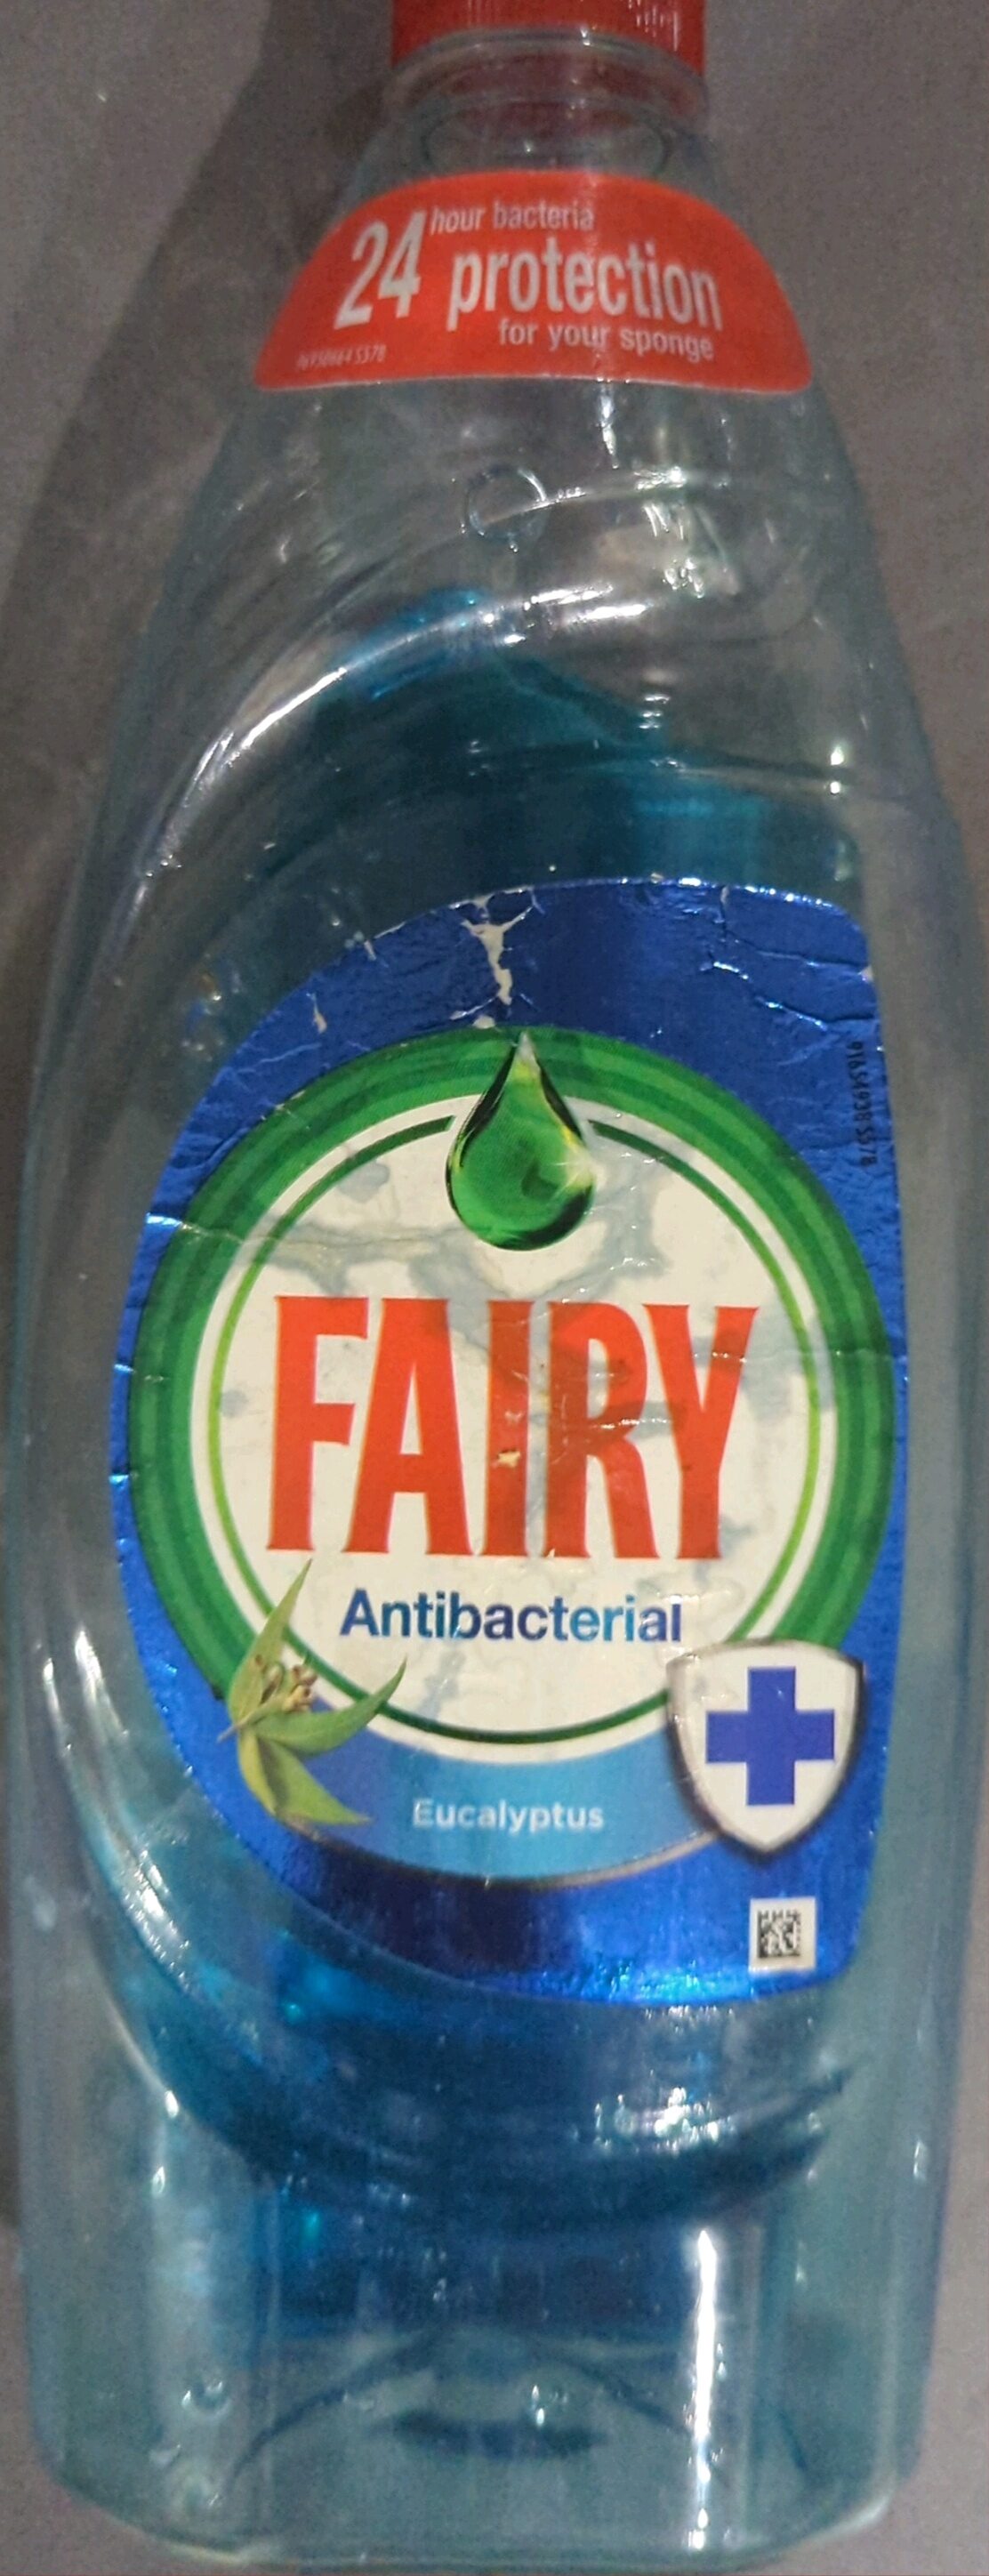 Fairy Liquid Antibacterial - Product - en